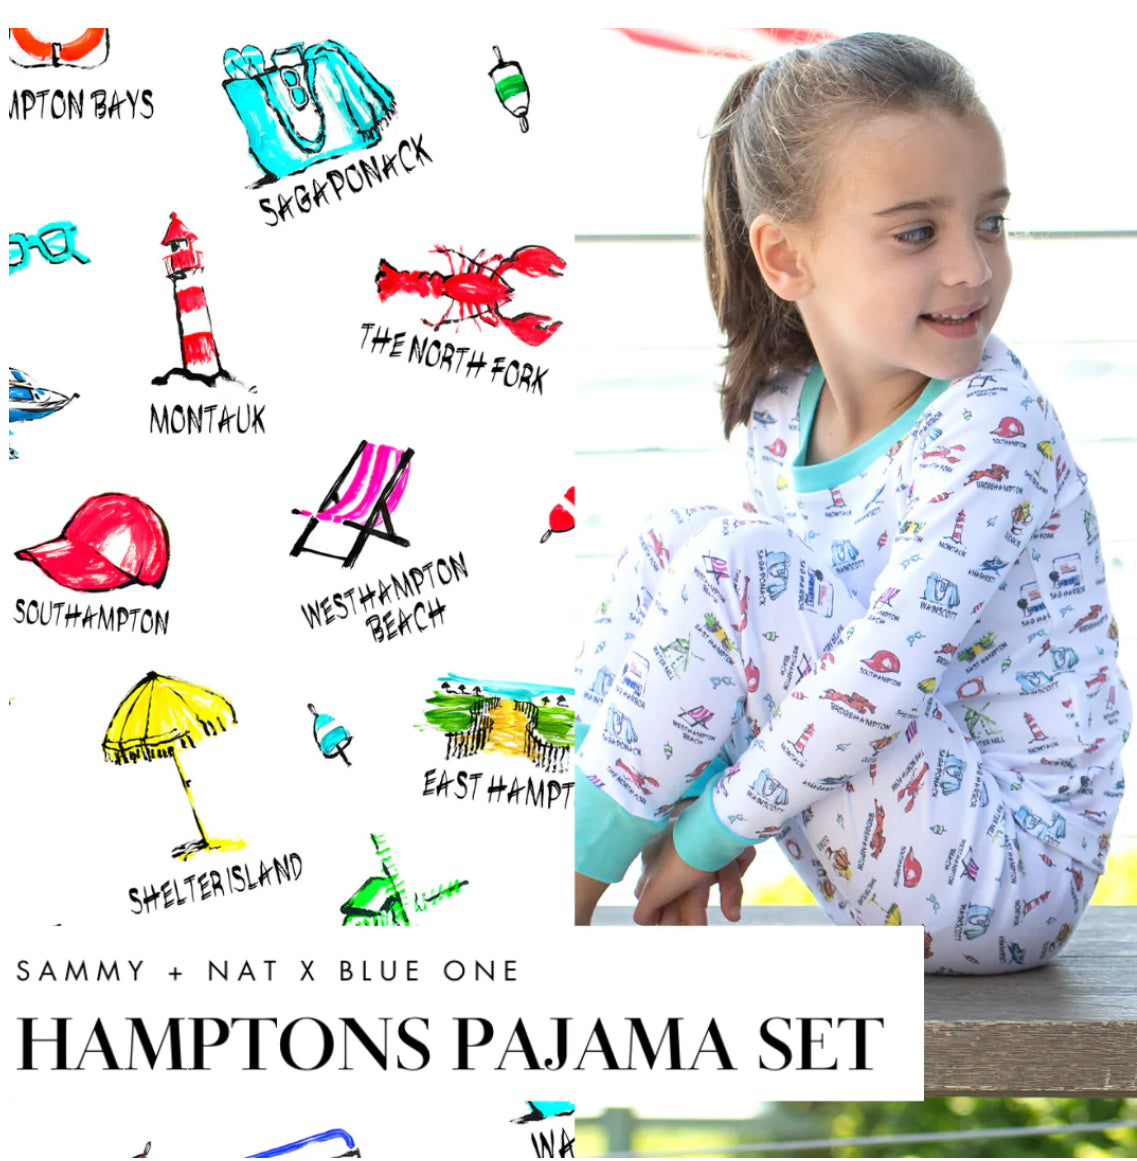 Sammy + Nat Hamptons Pajama Set